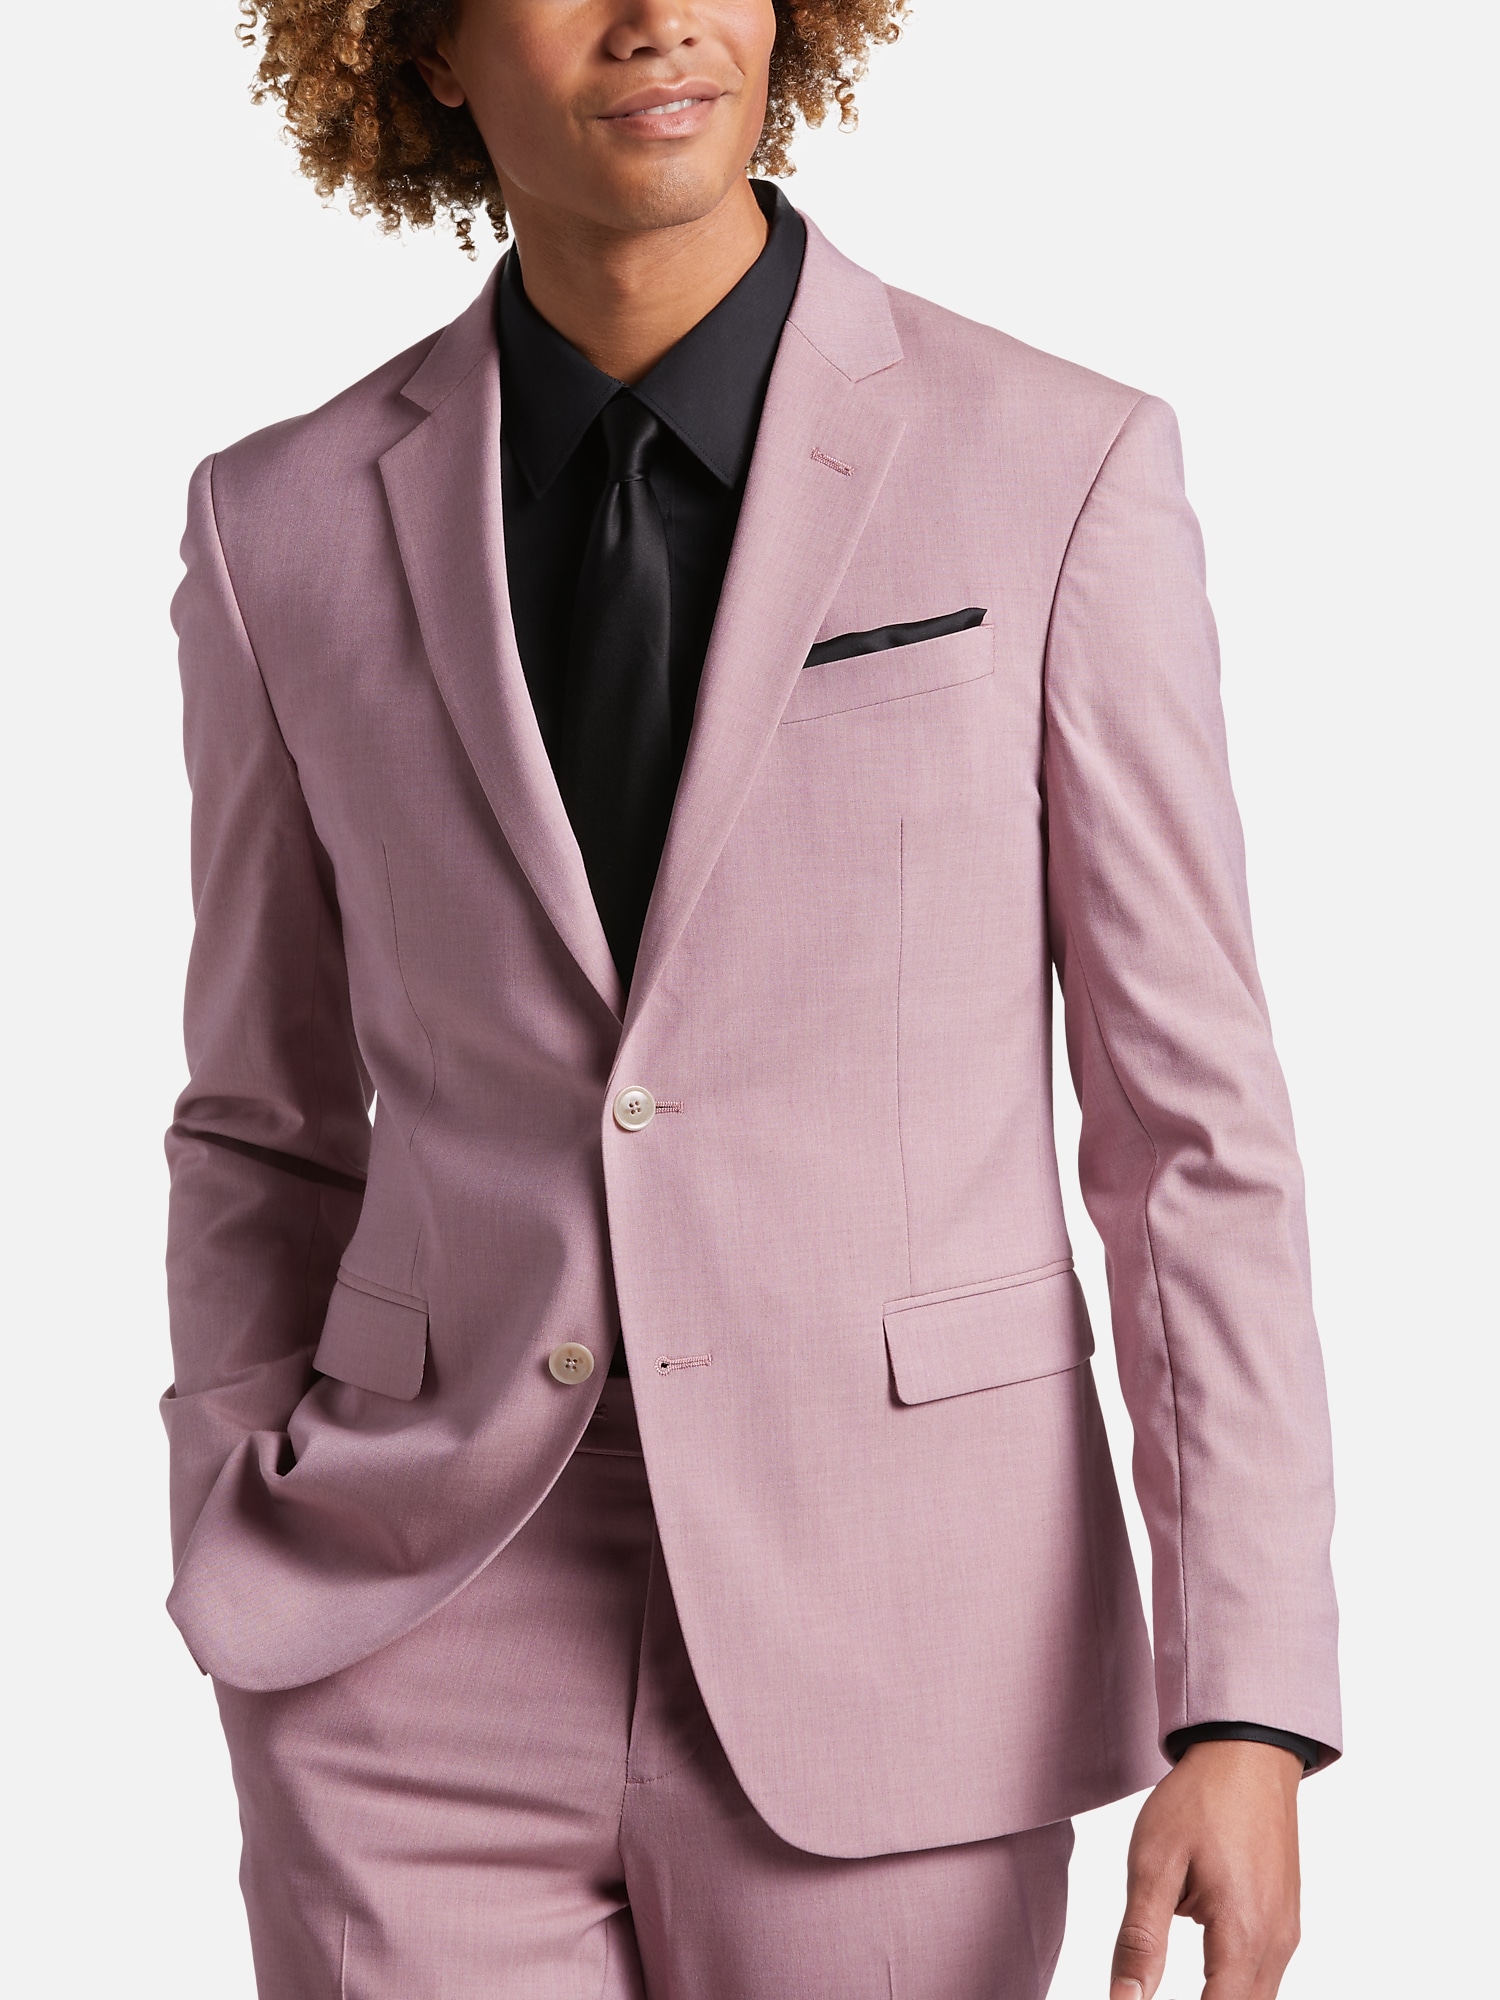 Egara Mens Skinny Fit Notch Lapel Suit Separates Jacket (Various) only $29.99: eDeal Info